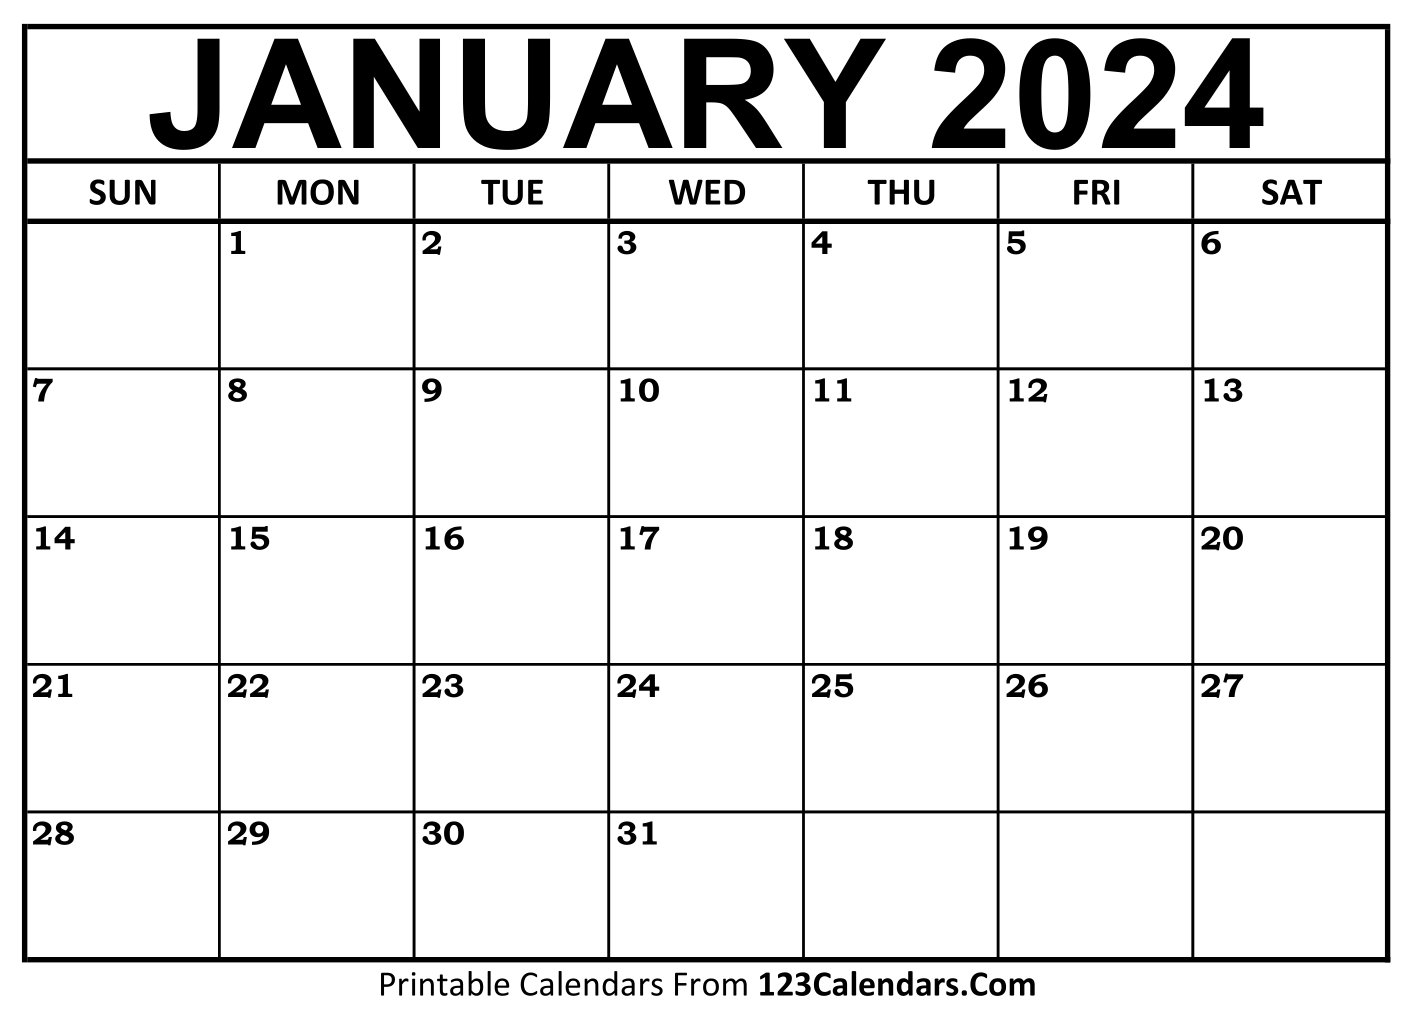 Printable January 2024 Calendar Templates - 123Calendars for January Monthly Calendar 2024 Printable